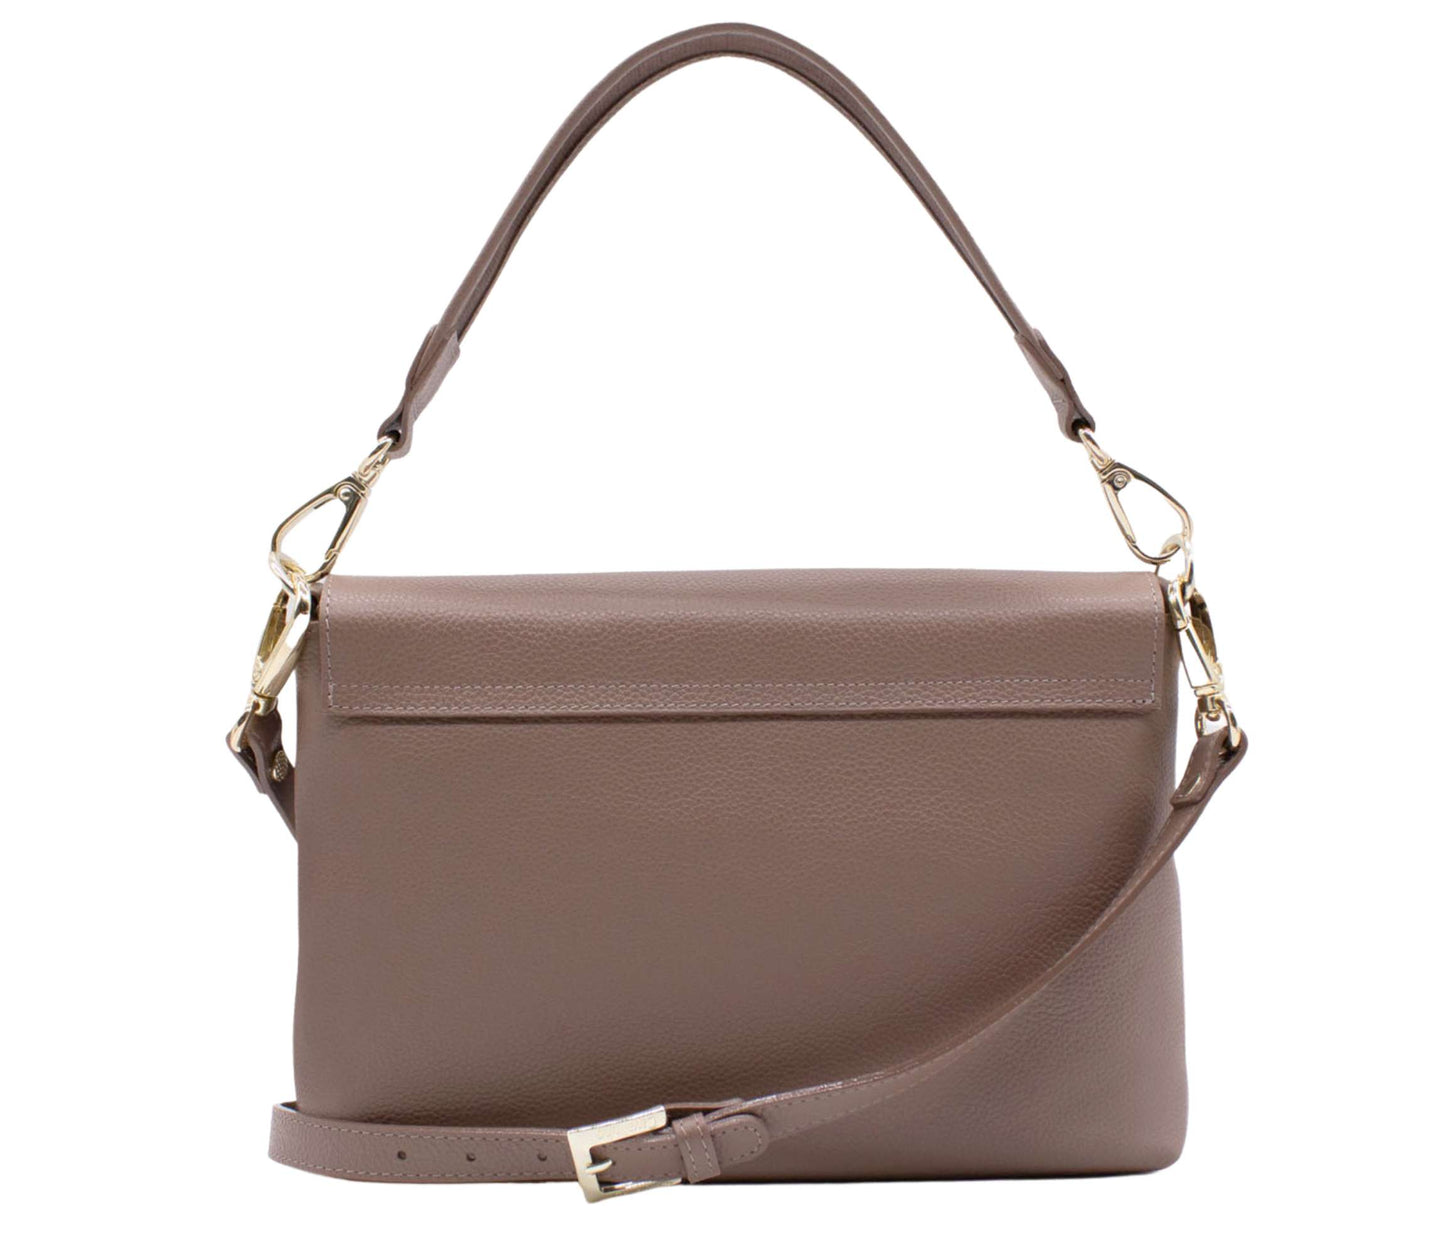 #color_ Sand | Cavalinho Muse 3 in 1: Leather Clutch, Handbag or Crossbody Bag - Sand - 18300509.07.99_3